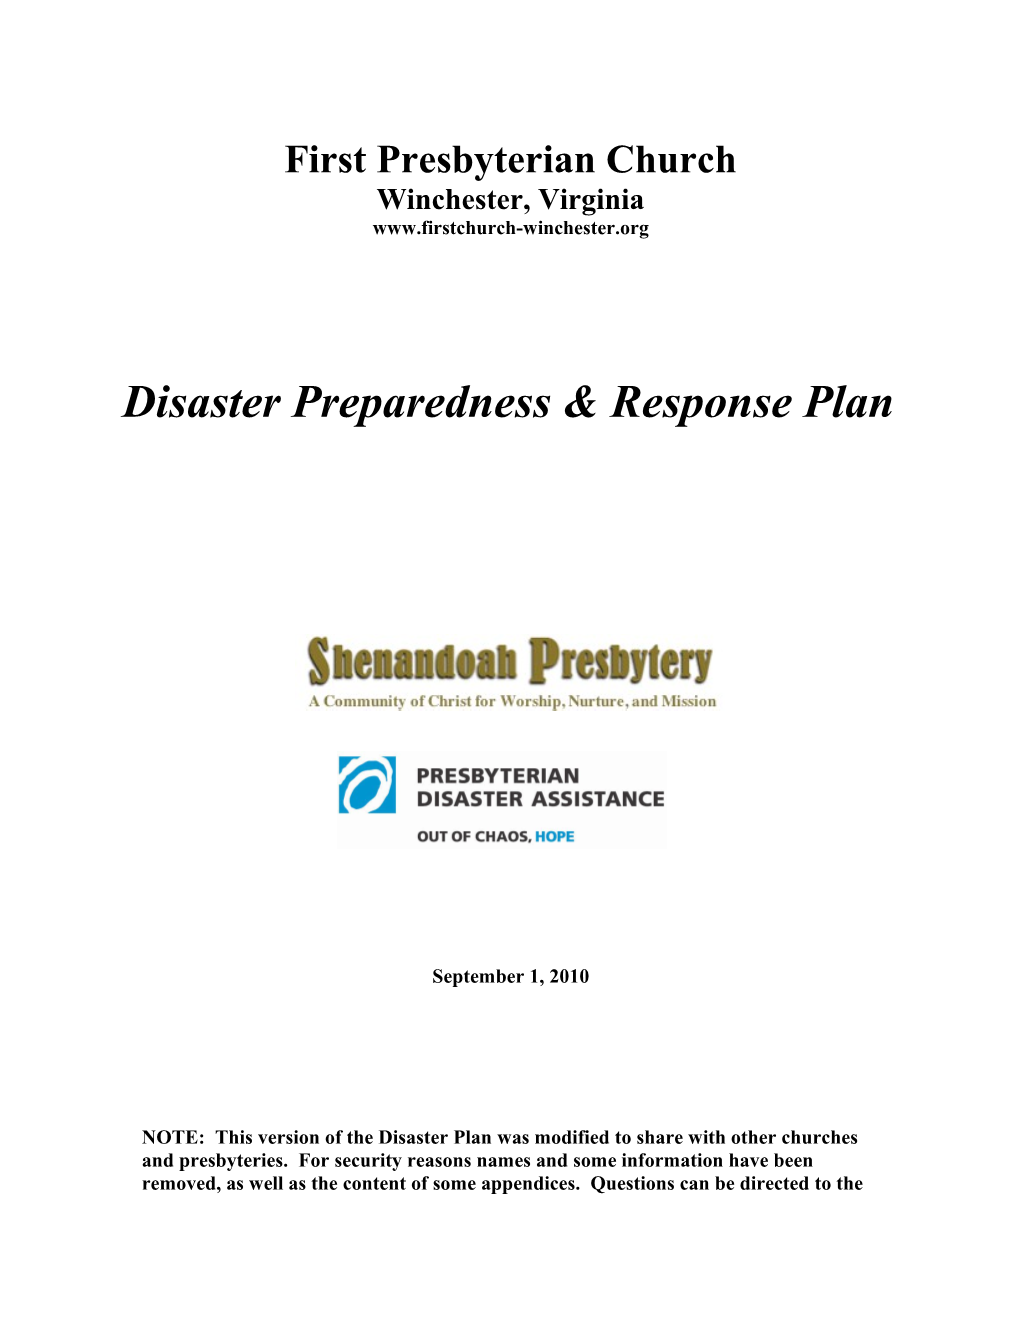 First Presbyterian Church Disaster Preparedness and Response Plan